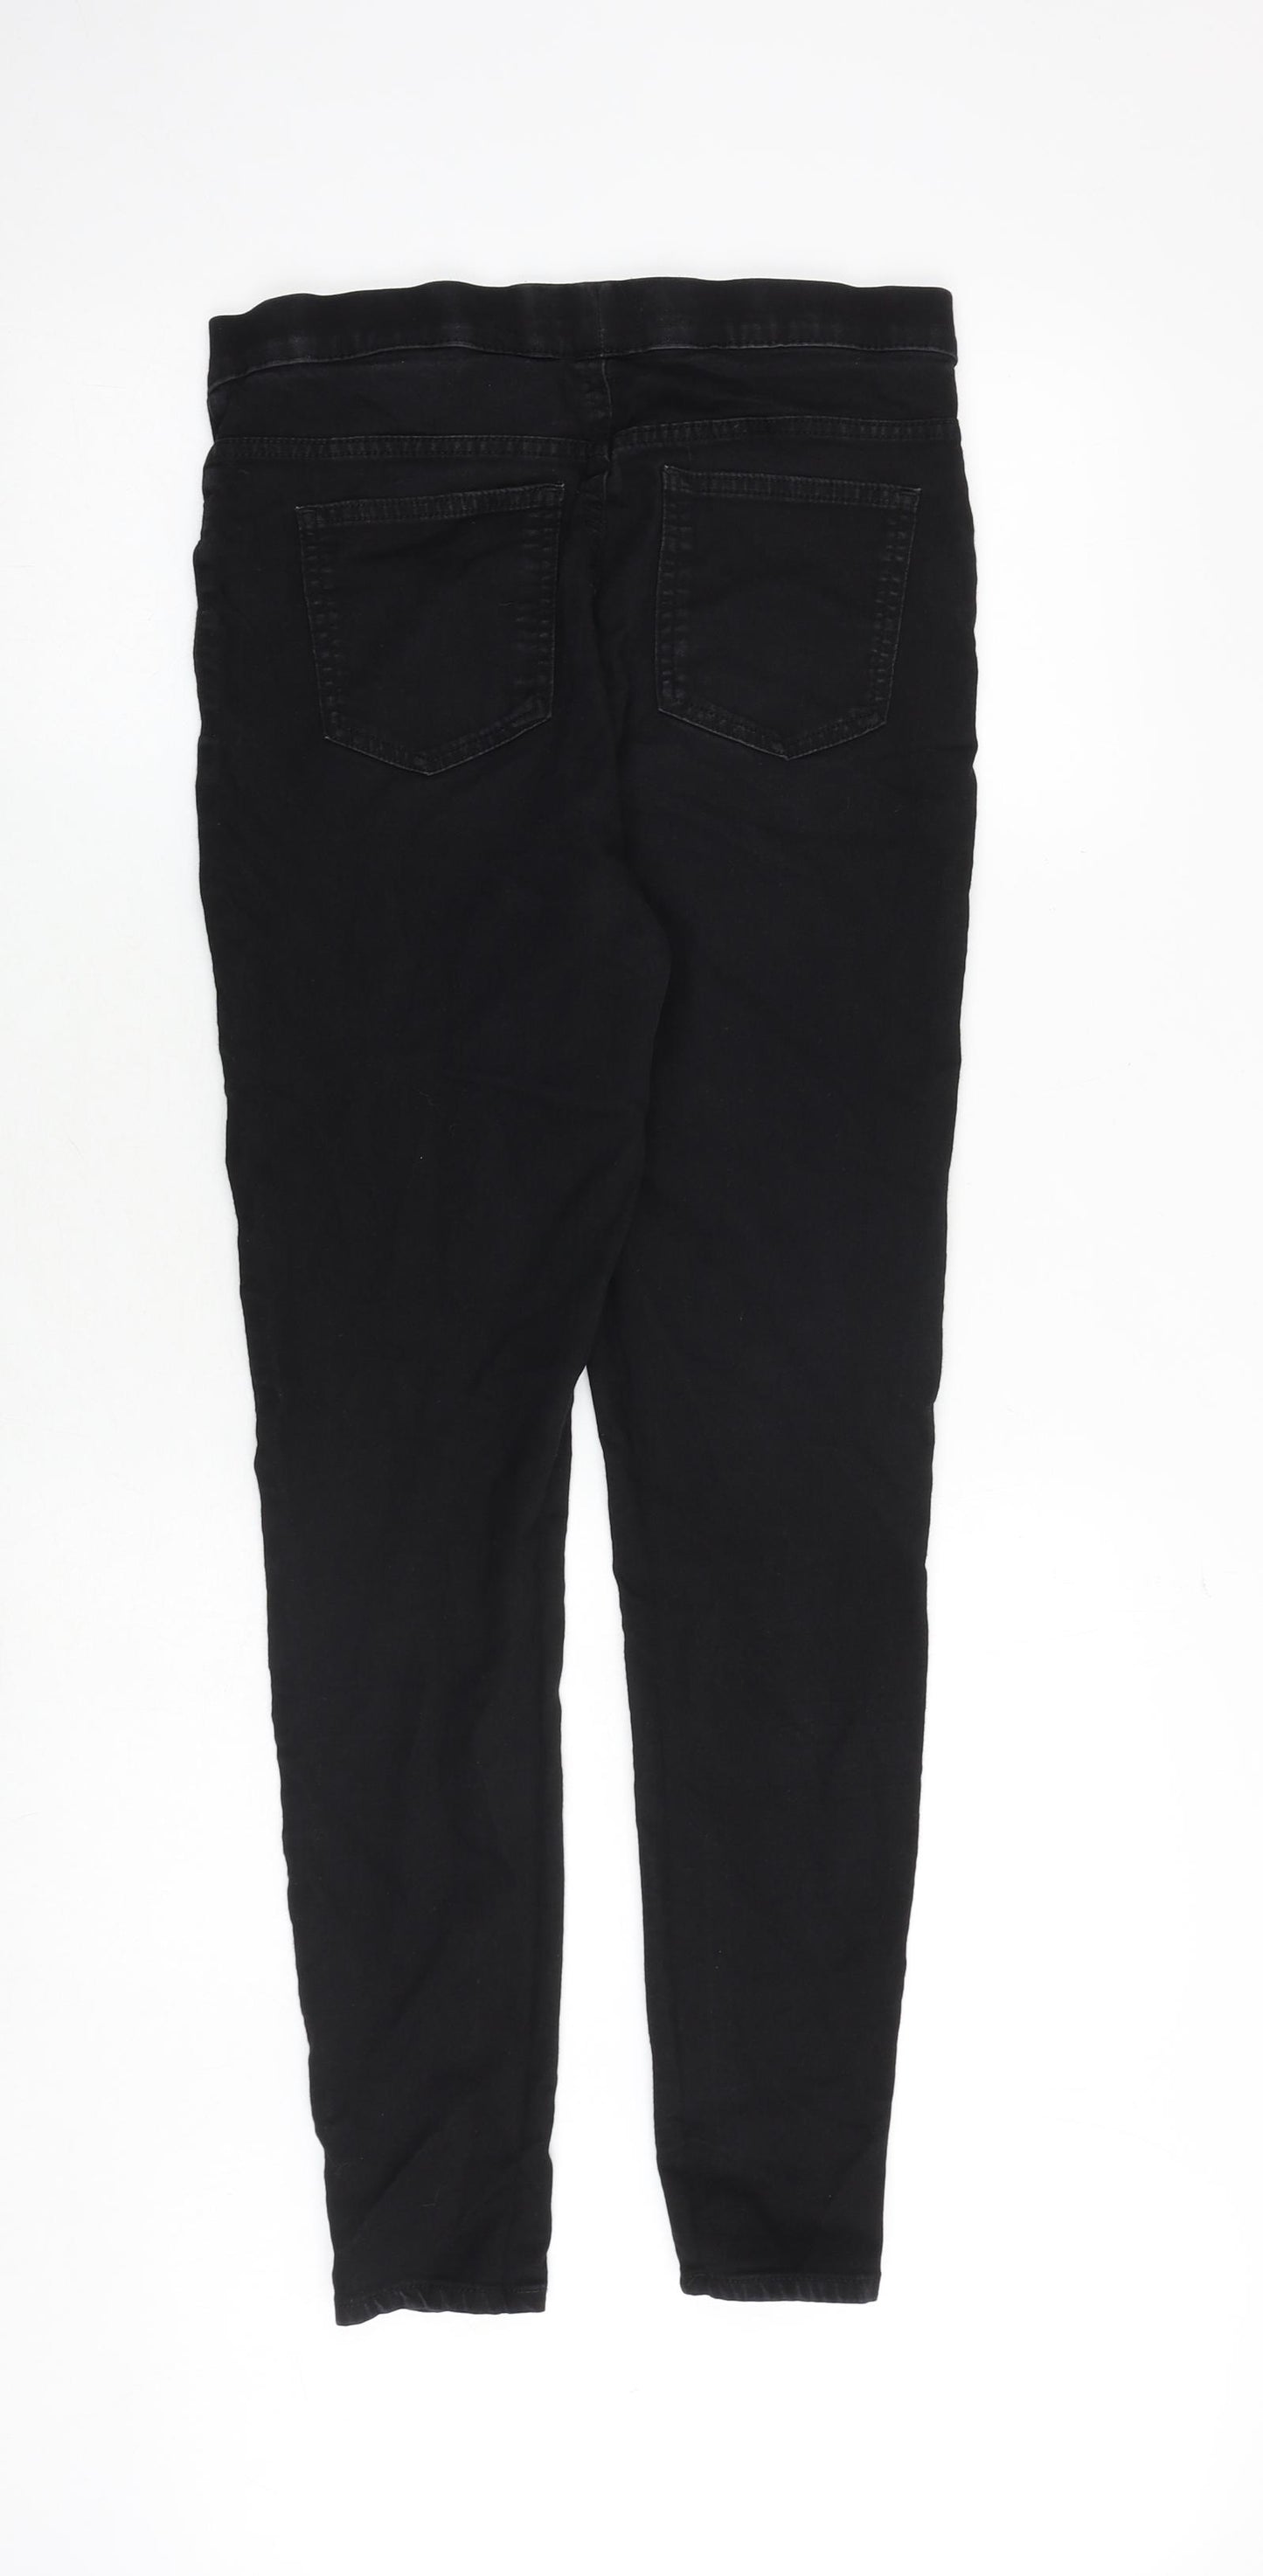 Marks and Spencer Womens Black Cotton Jegging Jeans Size 12 Regular